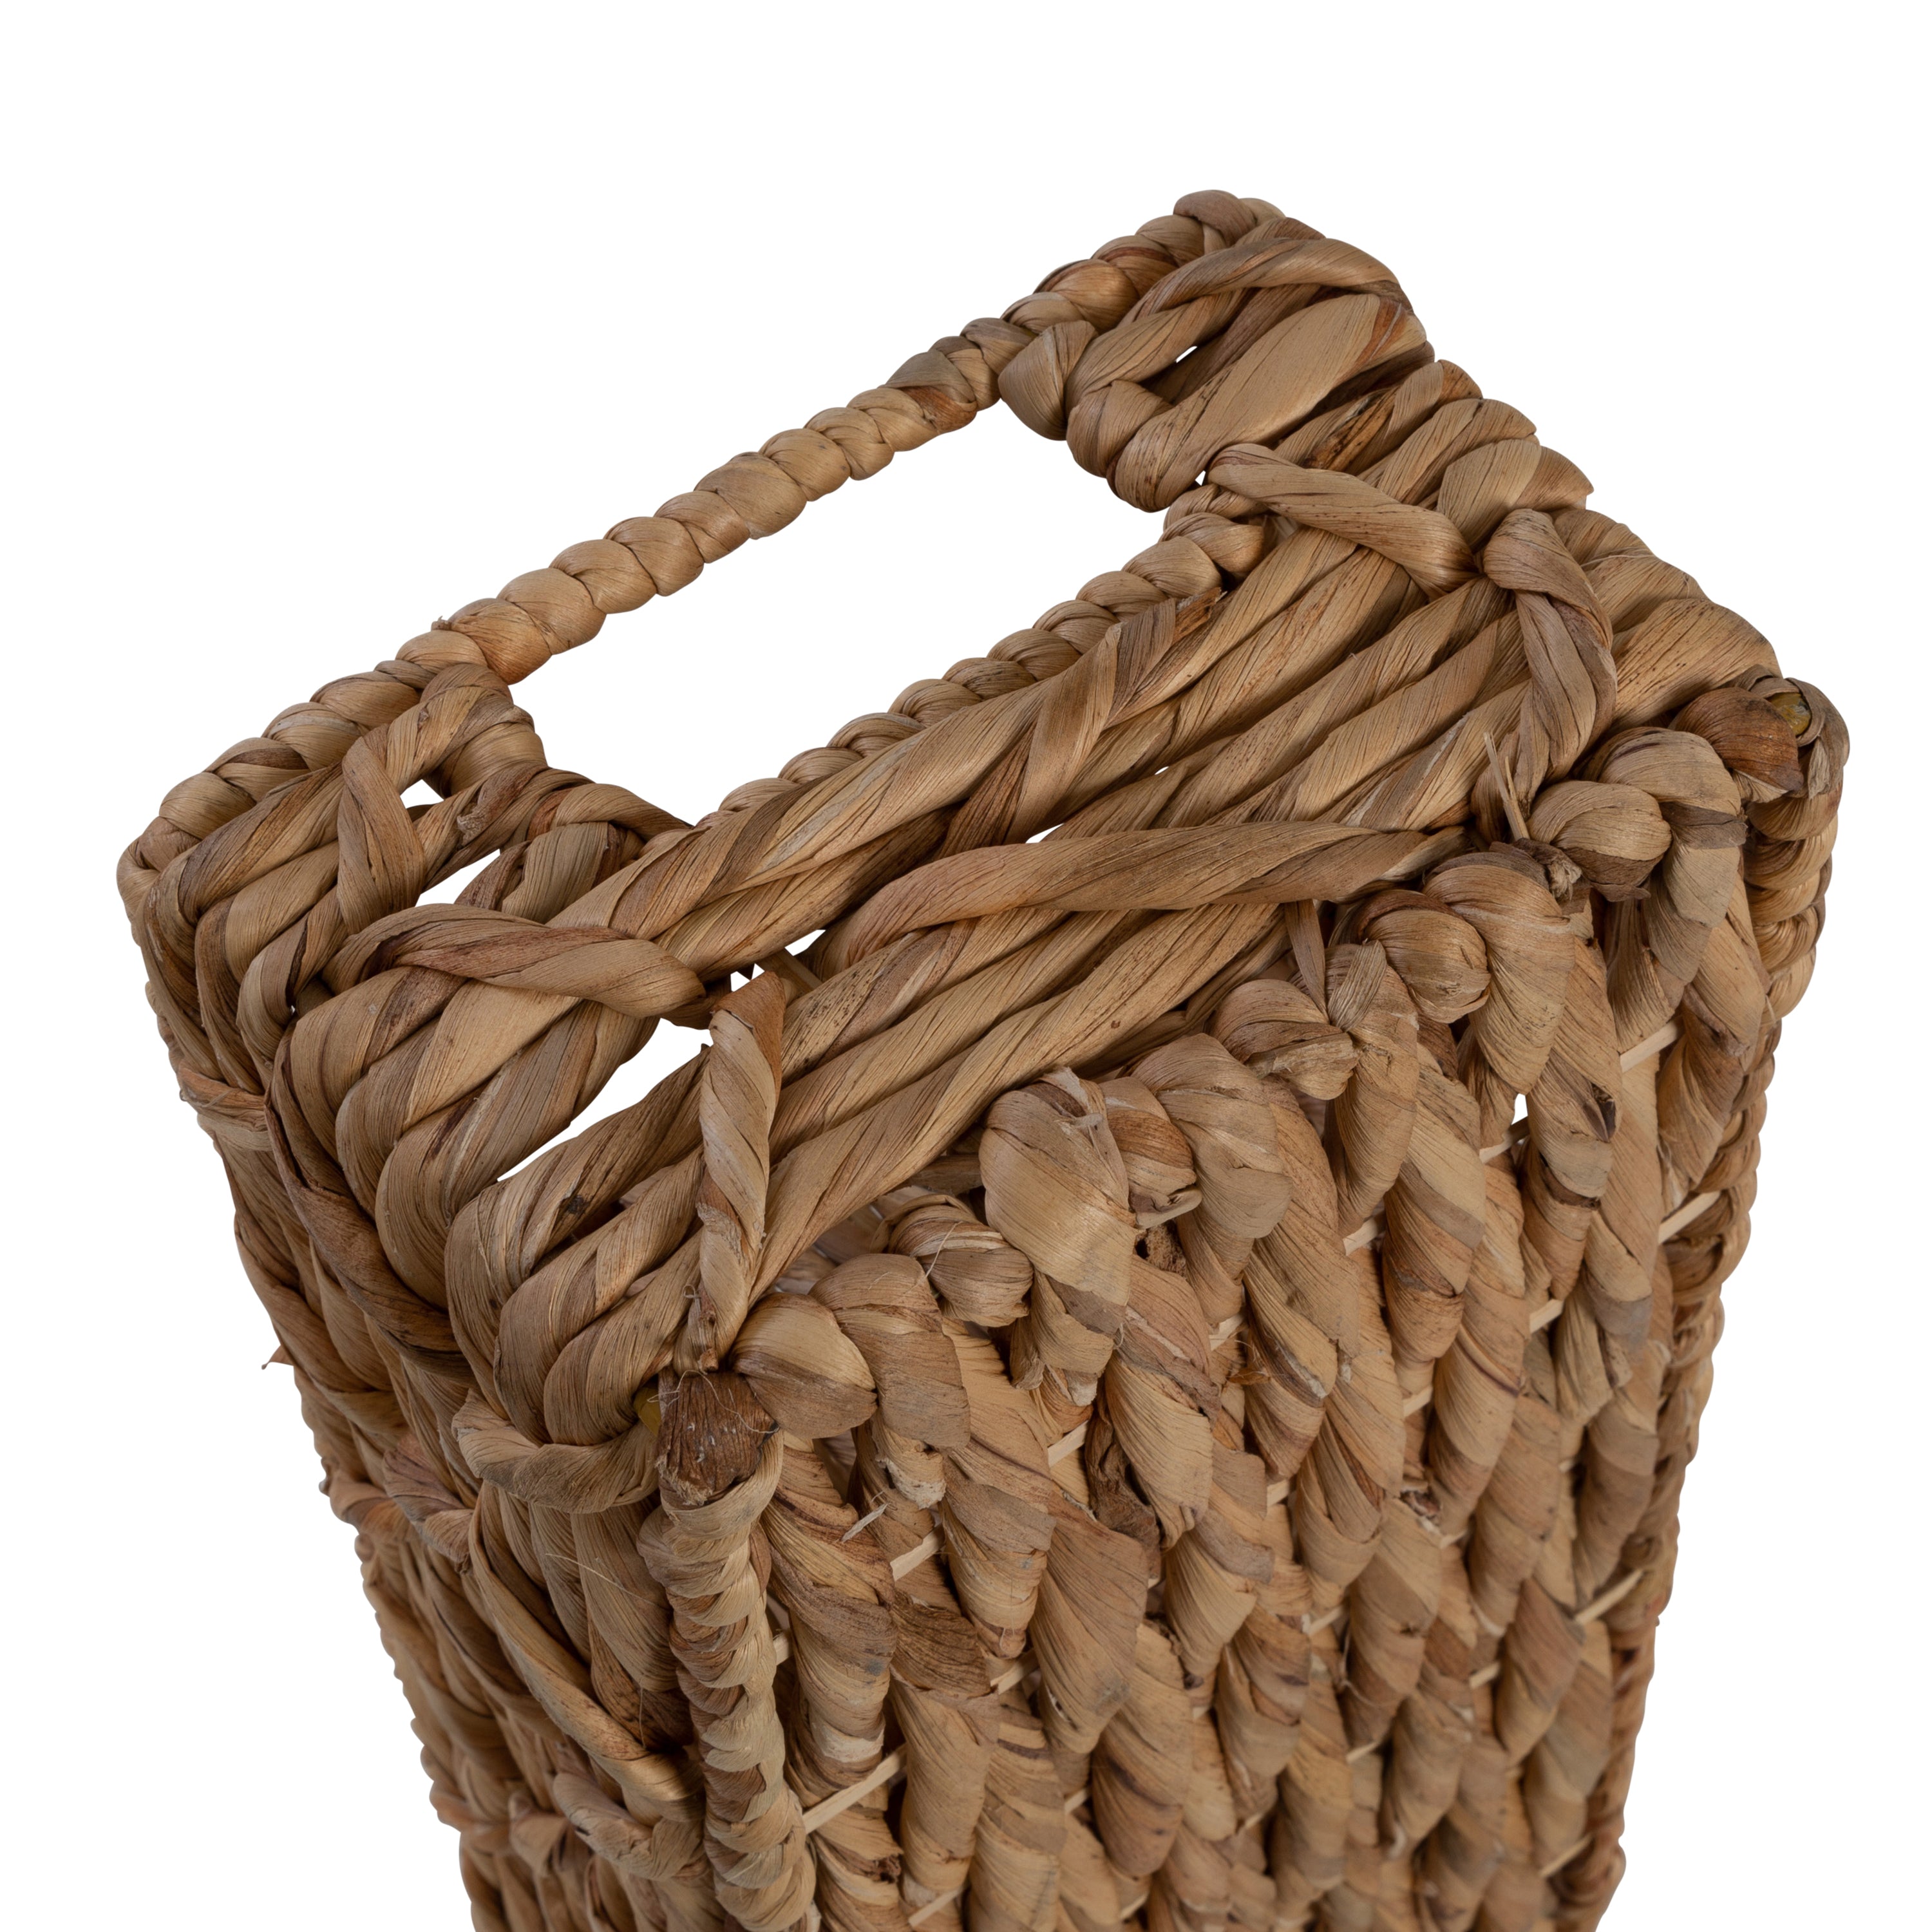 Honey Can Do Woven Baskets 2-Pack